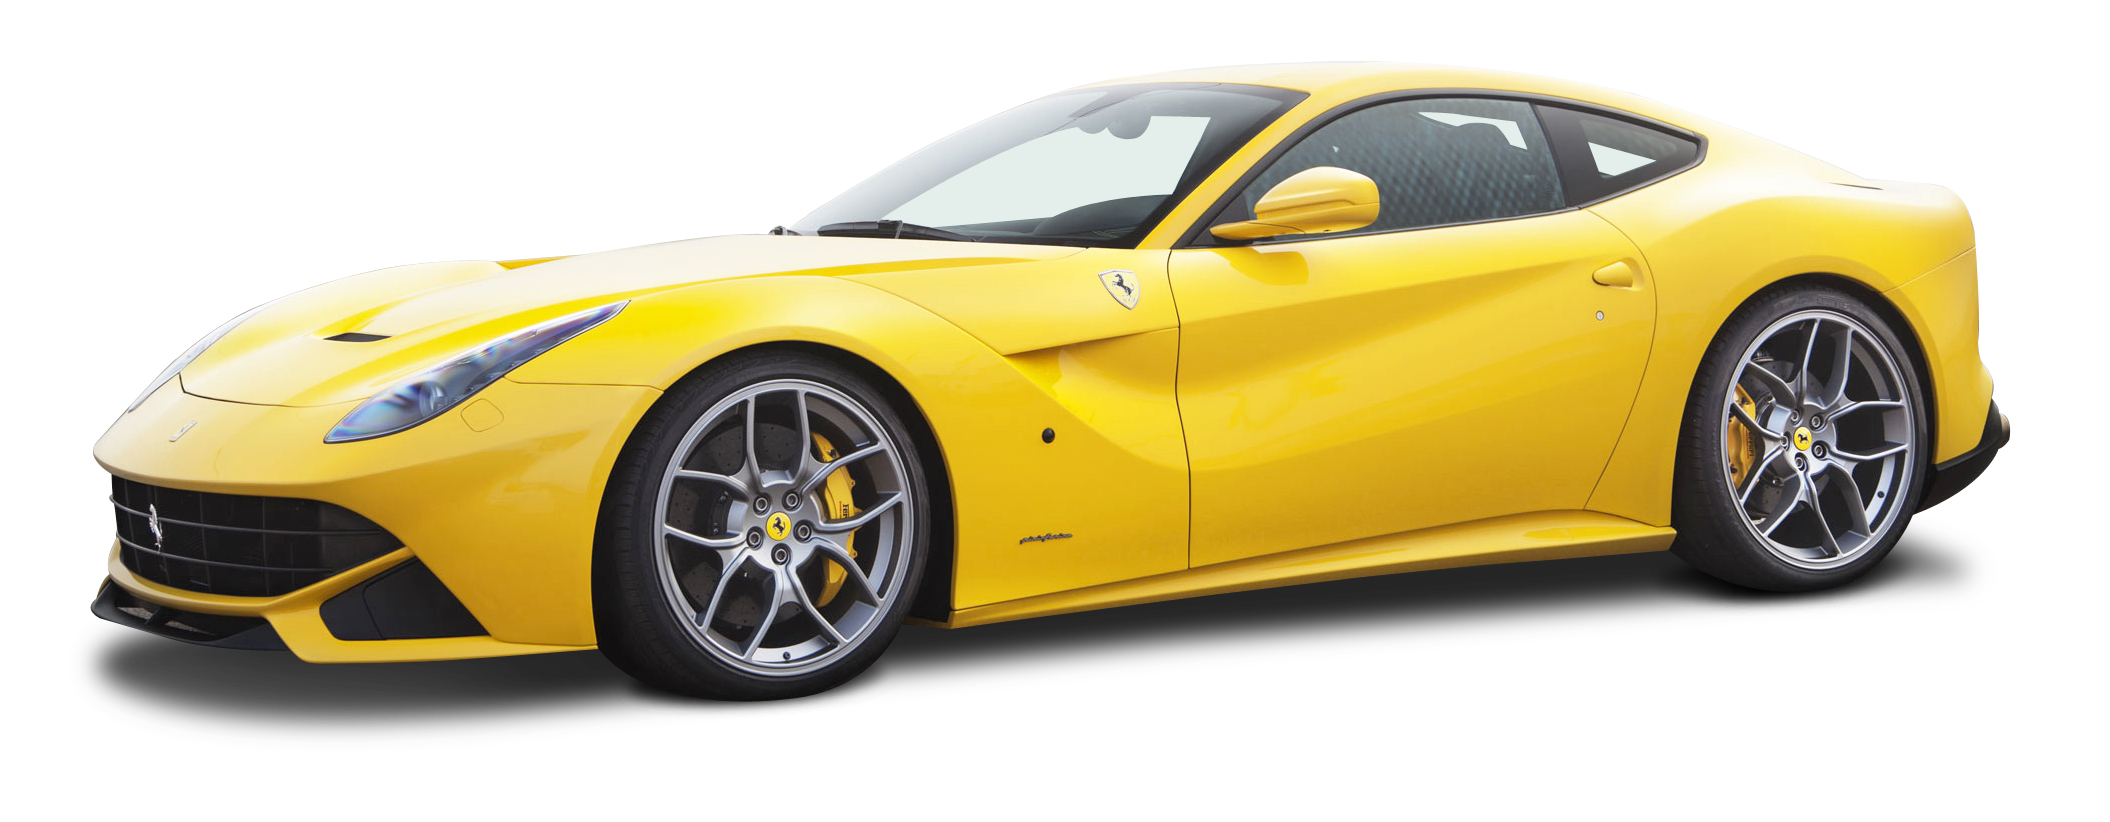 Ferrari Side Yellow View Free Photo PNG Image